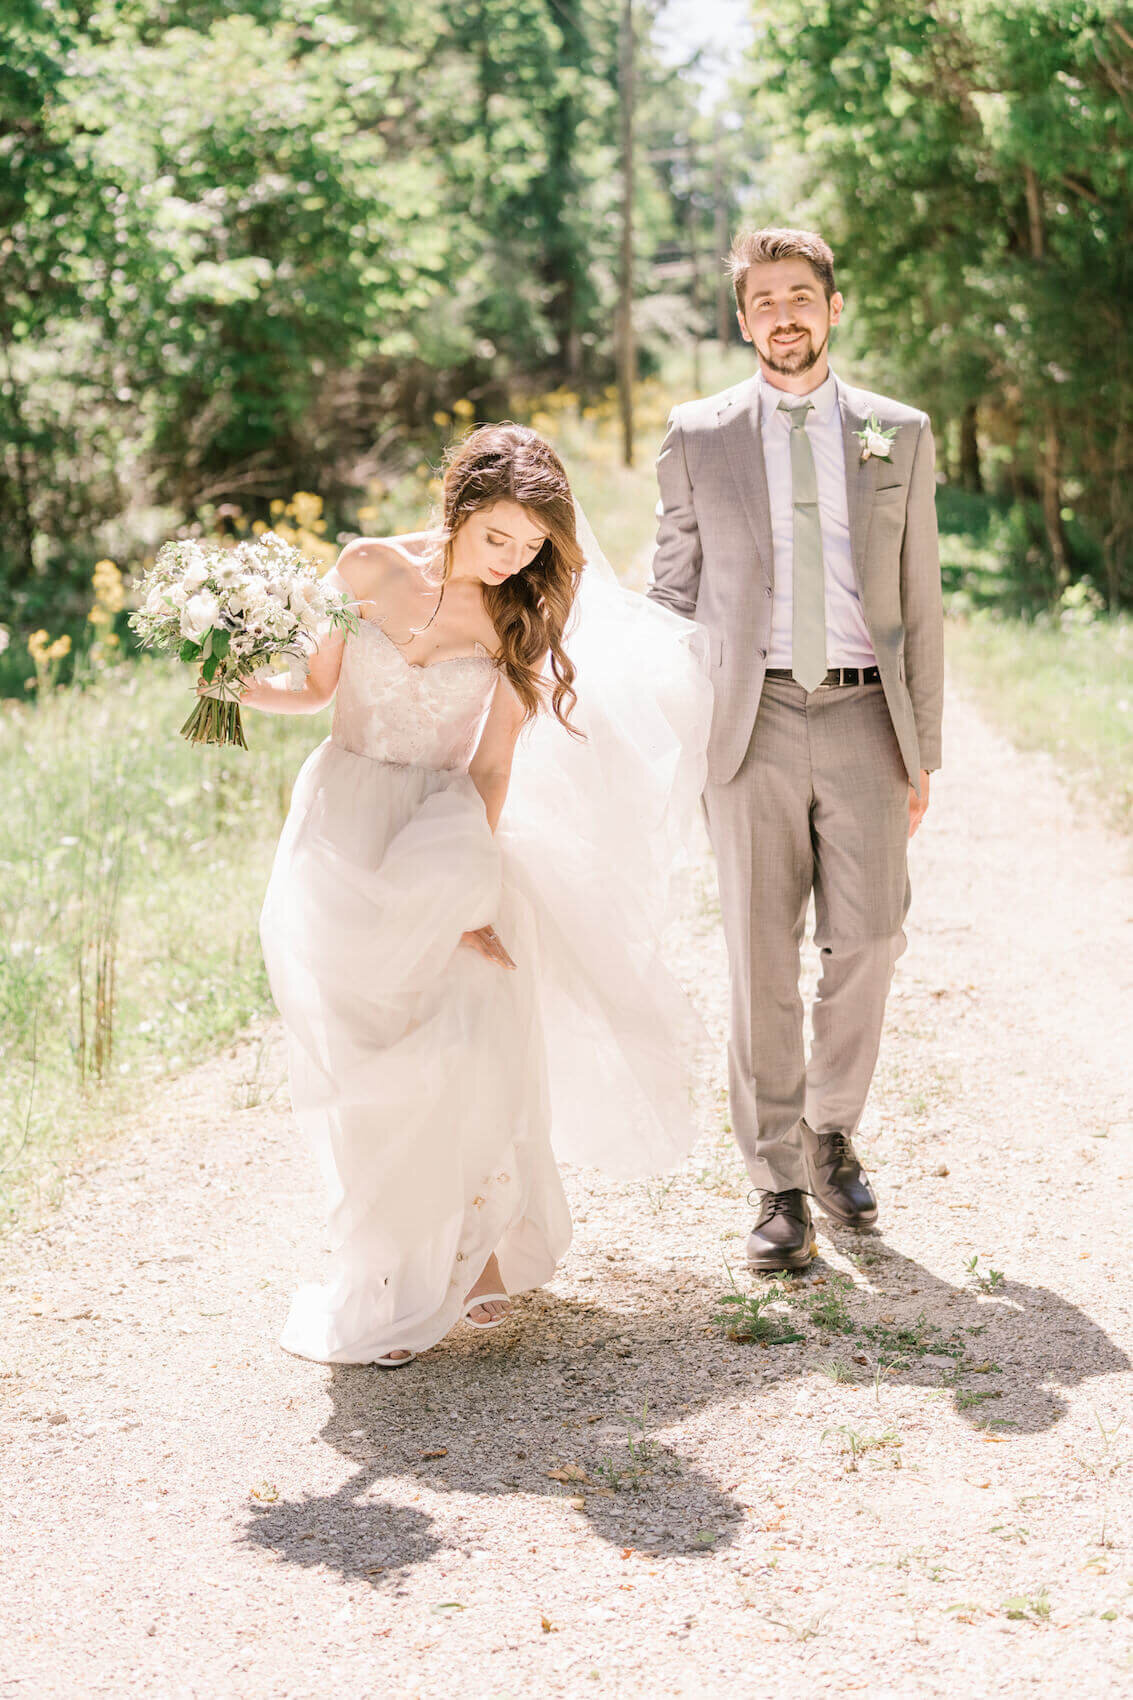 Christina and Bob wedding - bride holding up dress